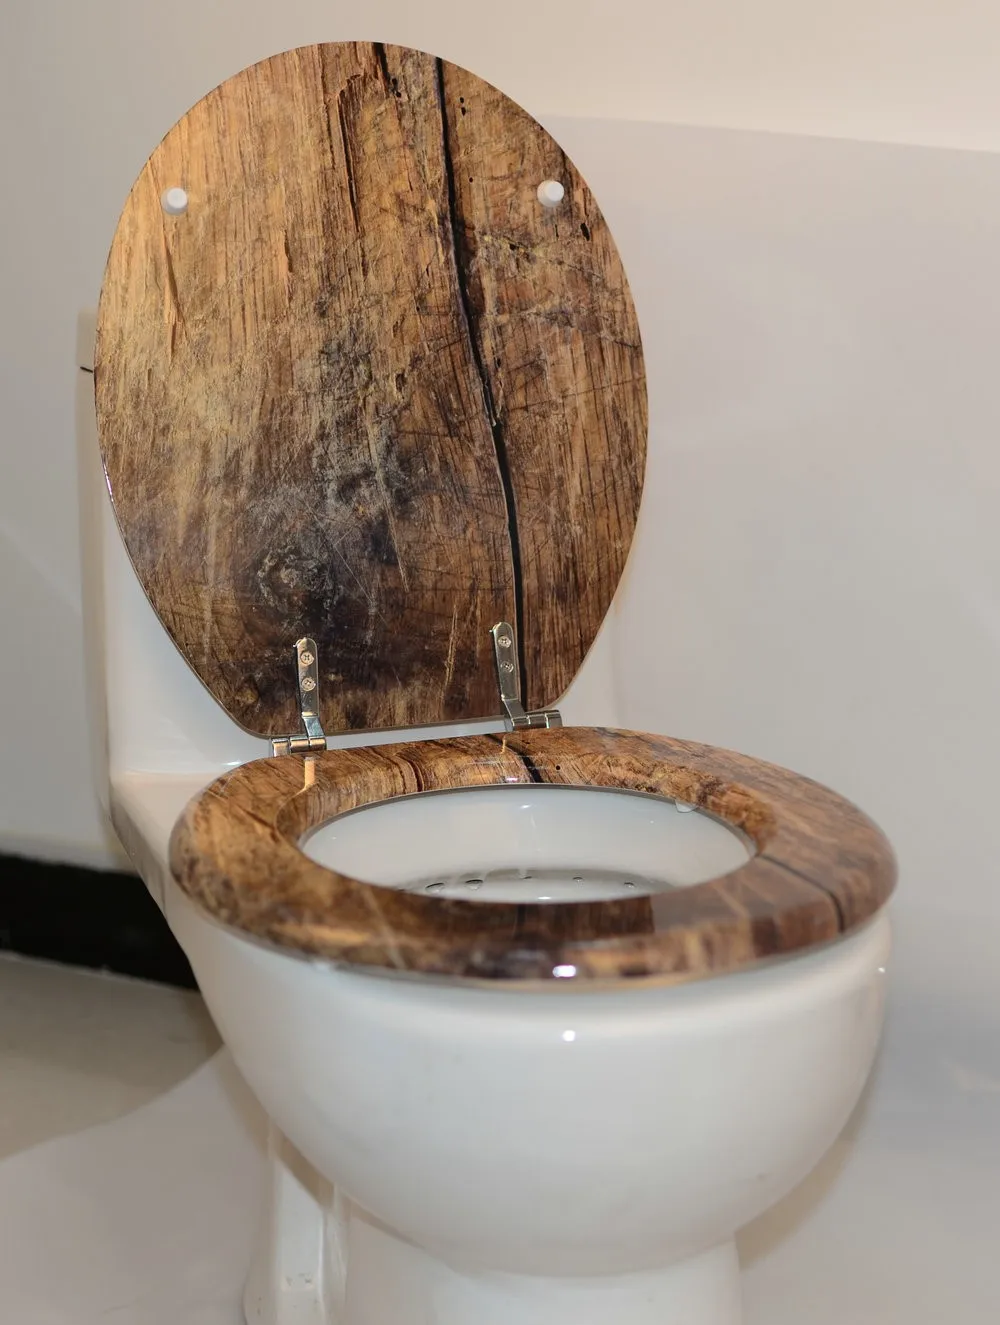 
Bathroom new design acrylic wooden wc toilet 